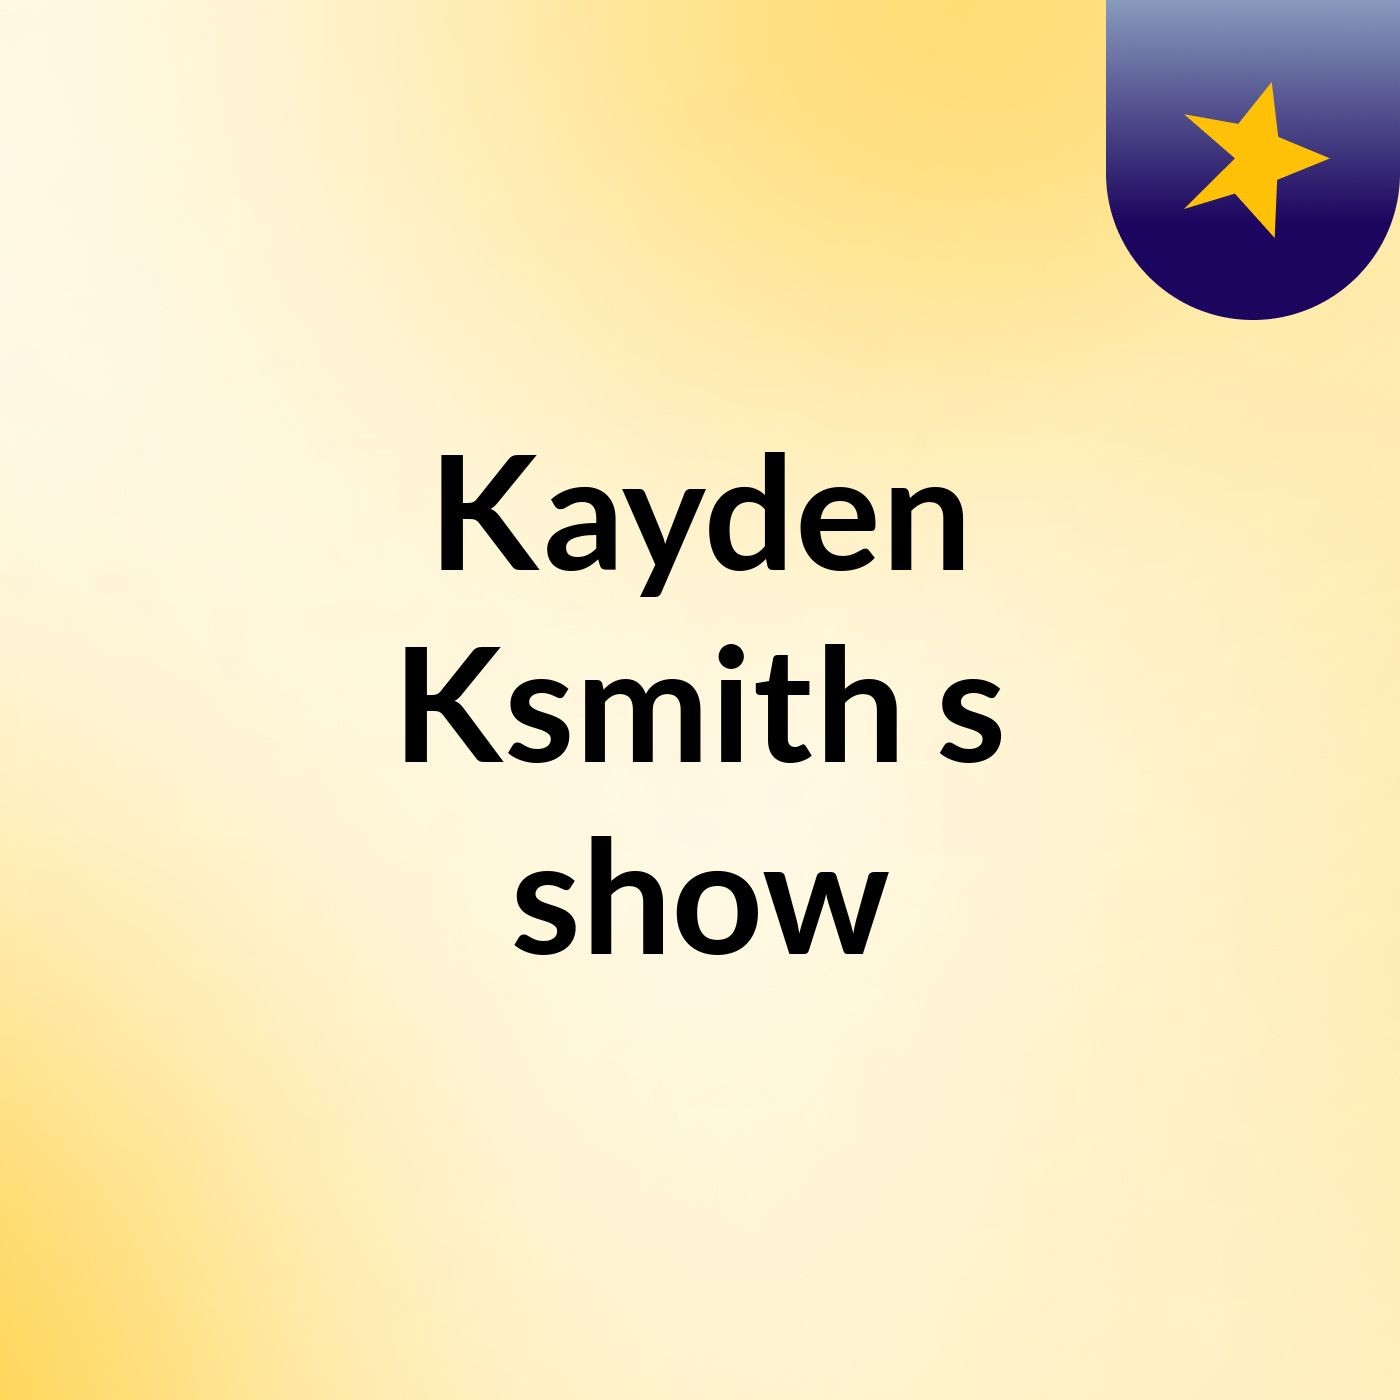 Episode 3 - Kayden Ksmith's show